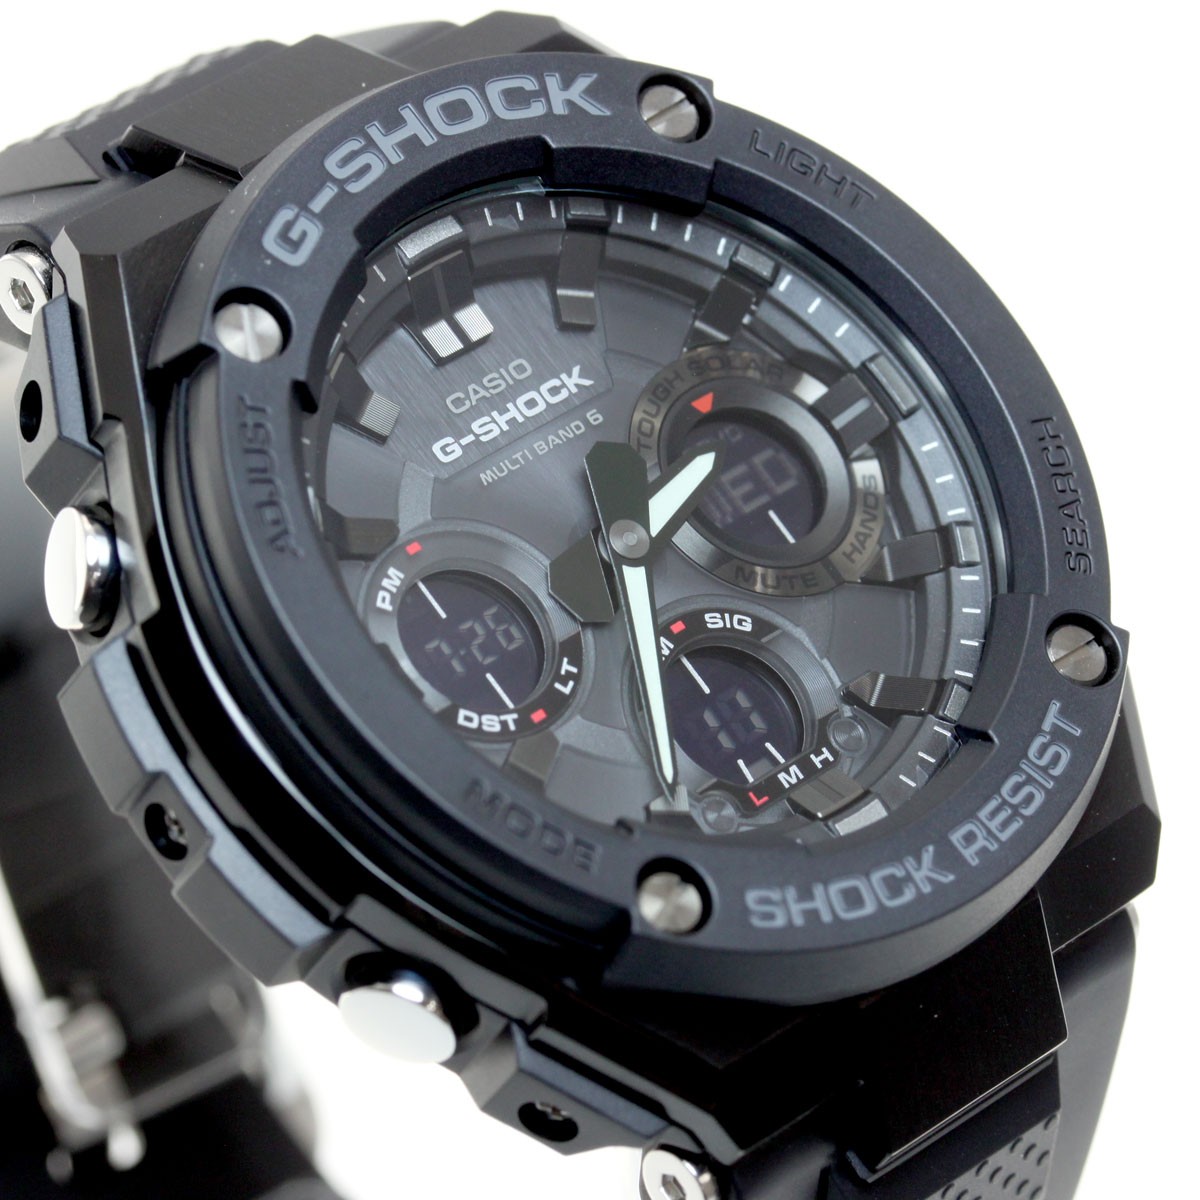 Gショック Gスチール G-SHOCK G-STEEL 電波ソーラー 腕時計 メンズ 黒